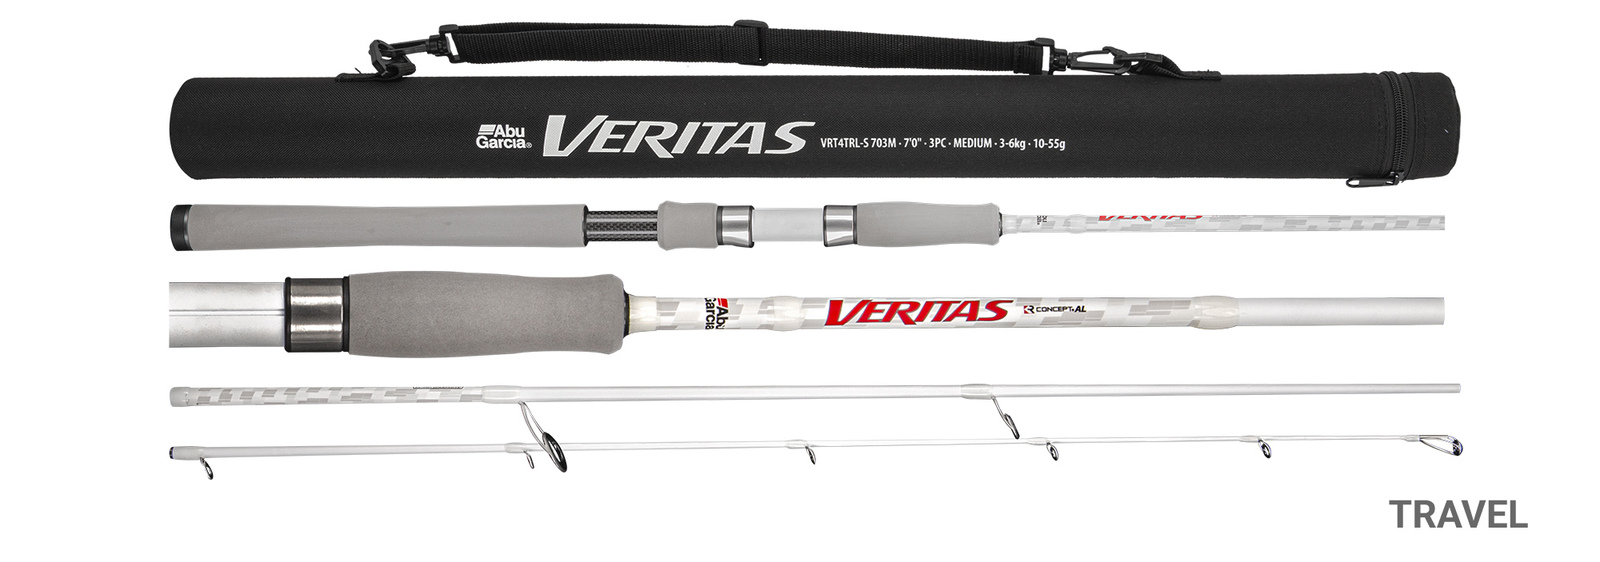 Abu Garcia Veritas 4.0 Travel Fishing Rods